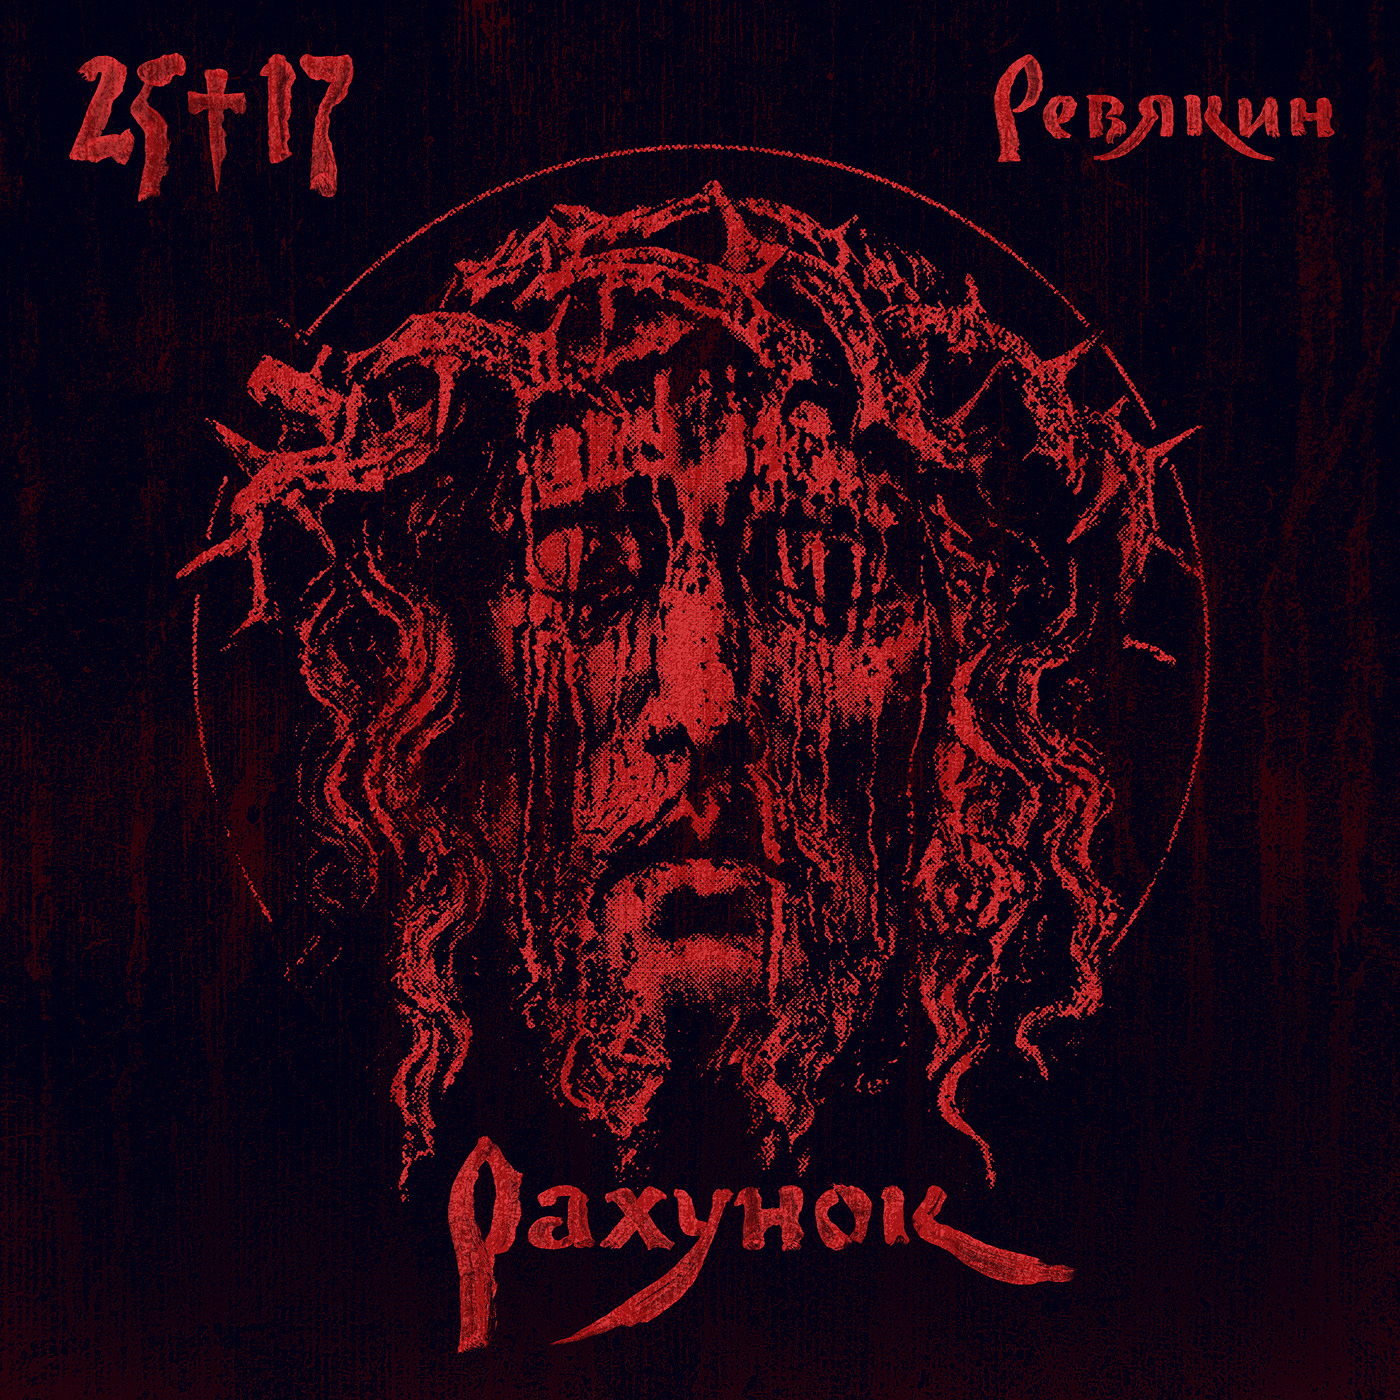 davidovsky symbolism logo music vinyl artwork design Photography  cd layout